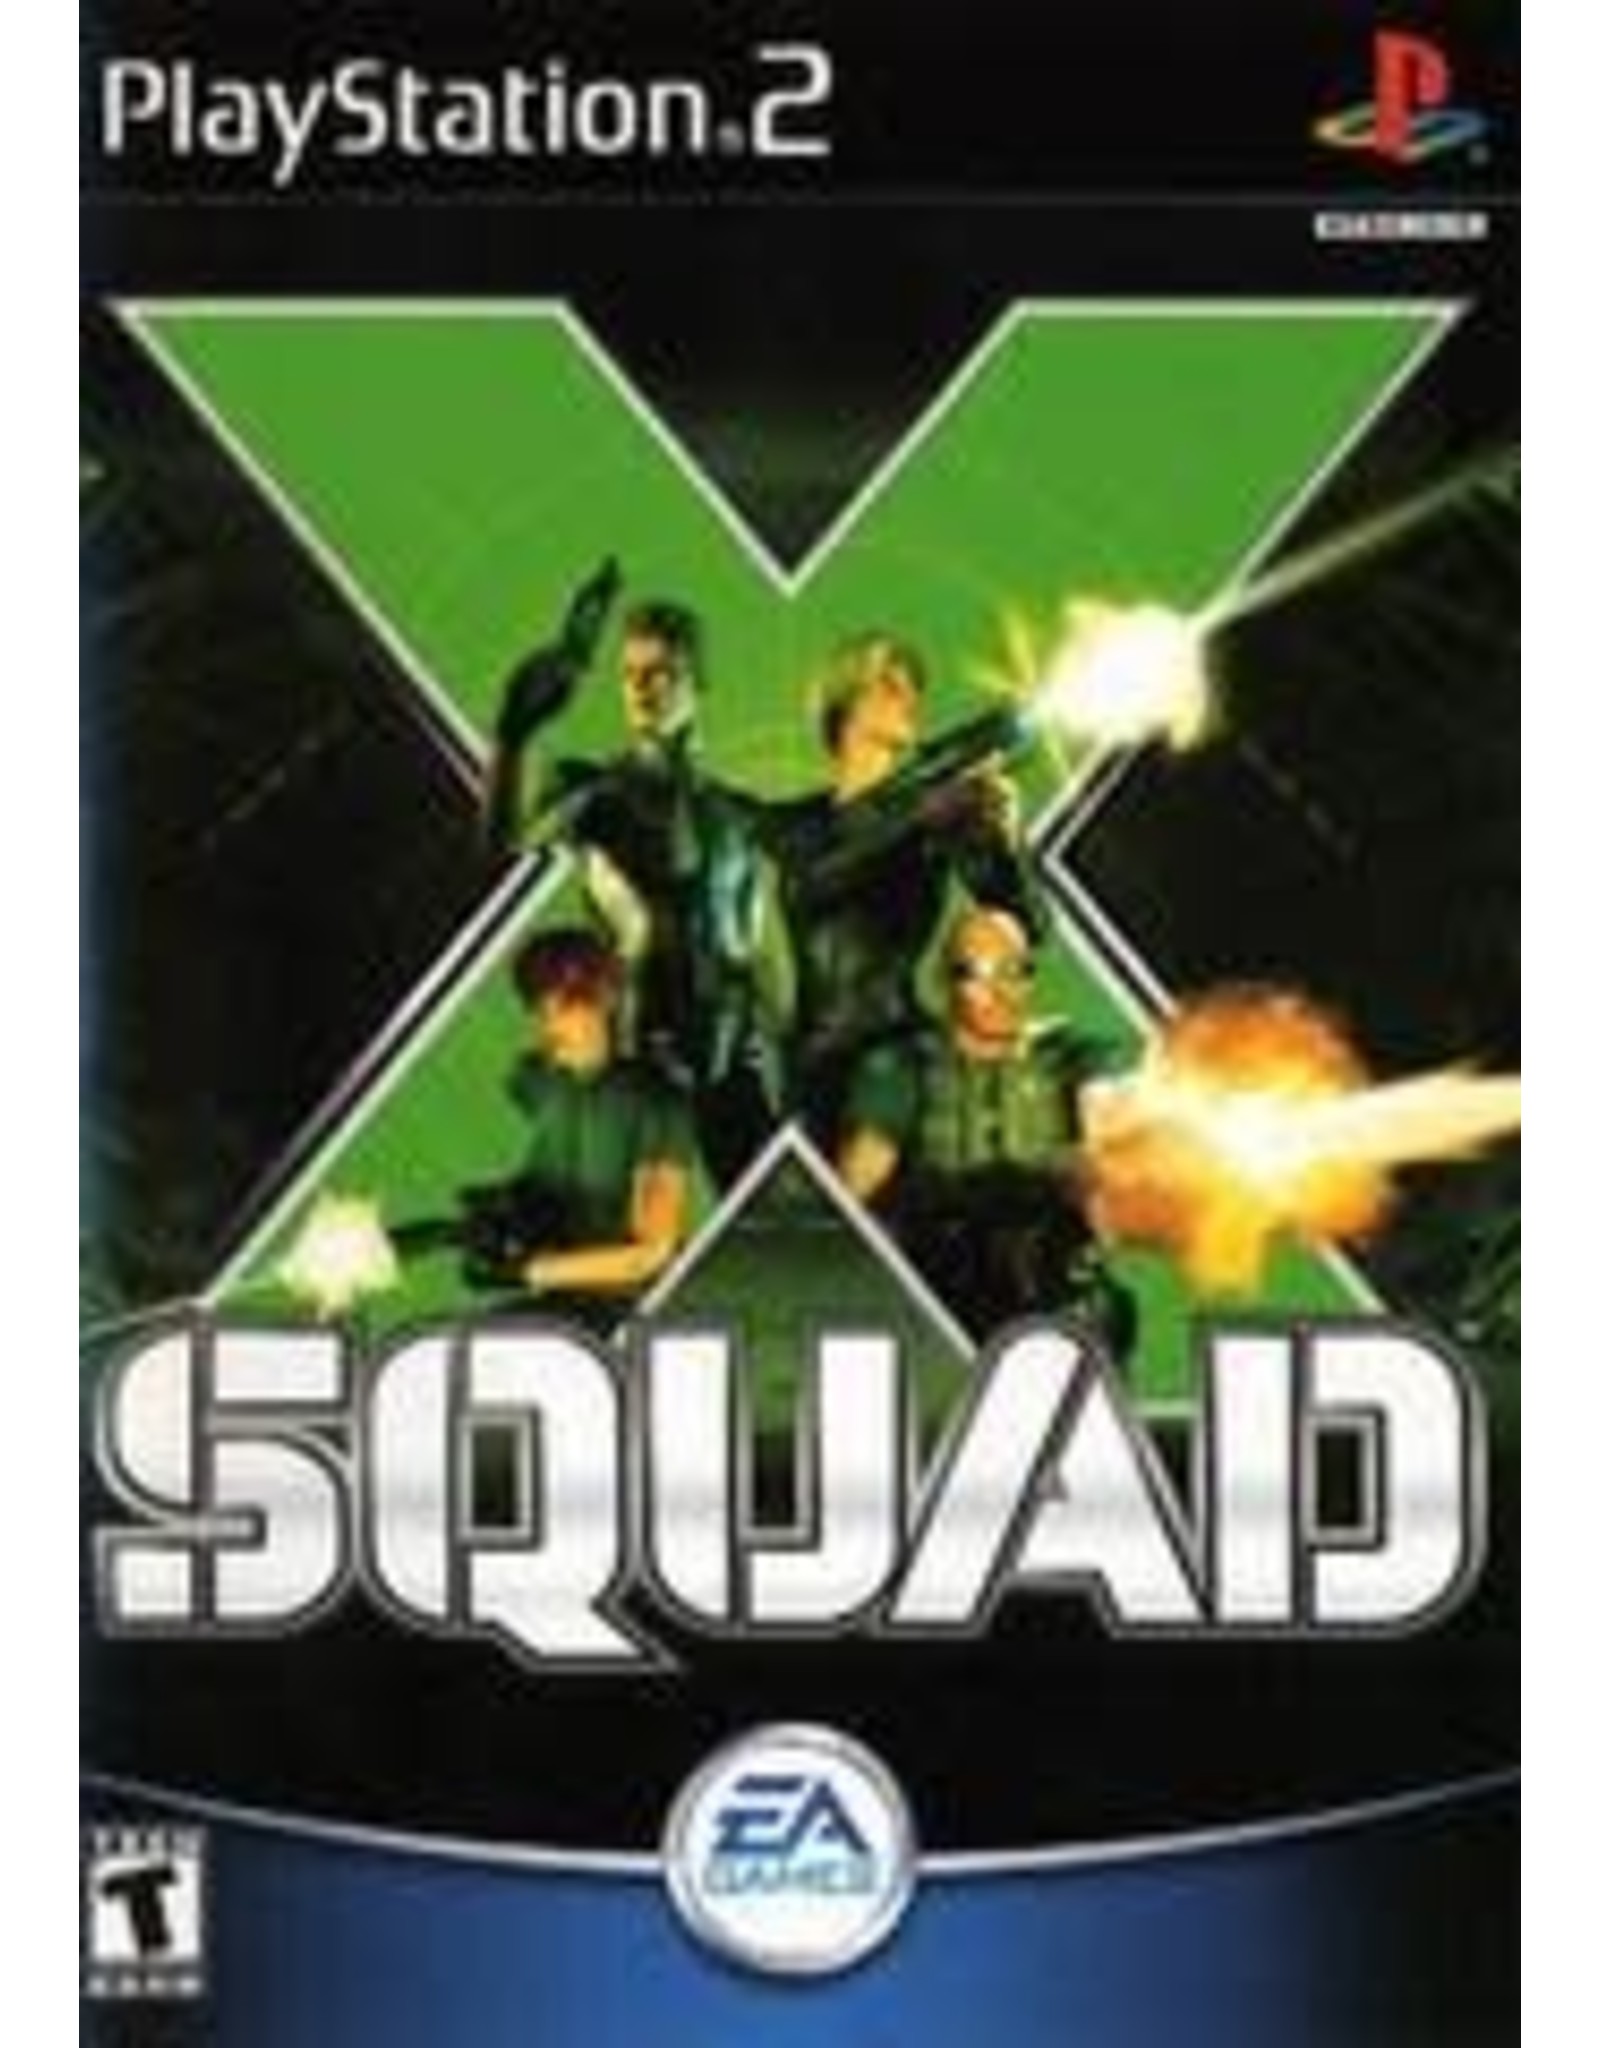 Playstation 2 X-Squad (CiB)